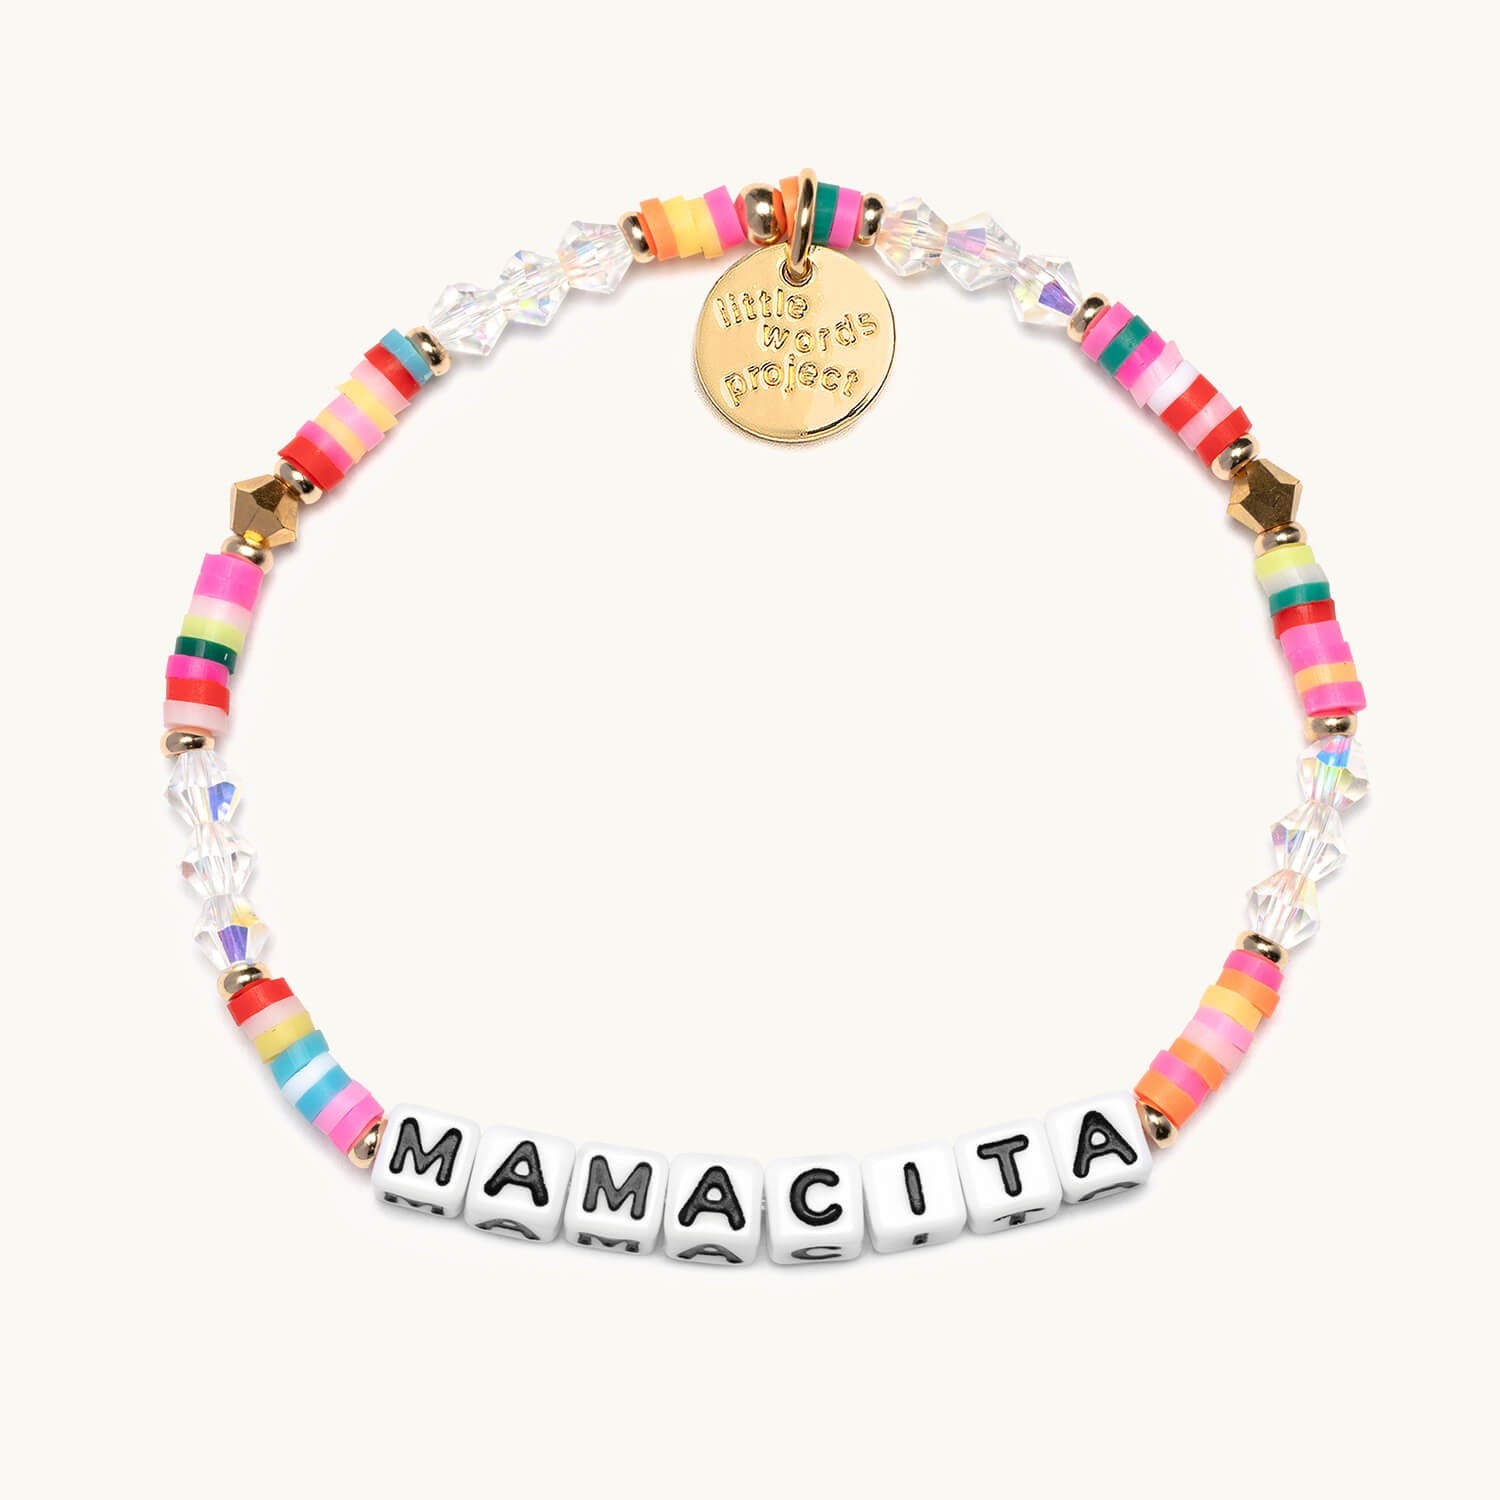 Mamacita- Mother's Day Bracelet